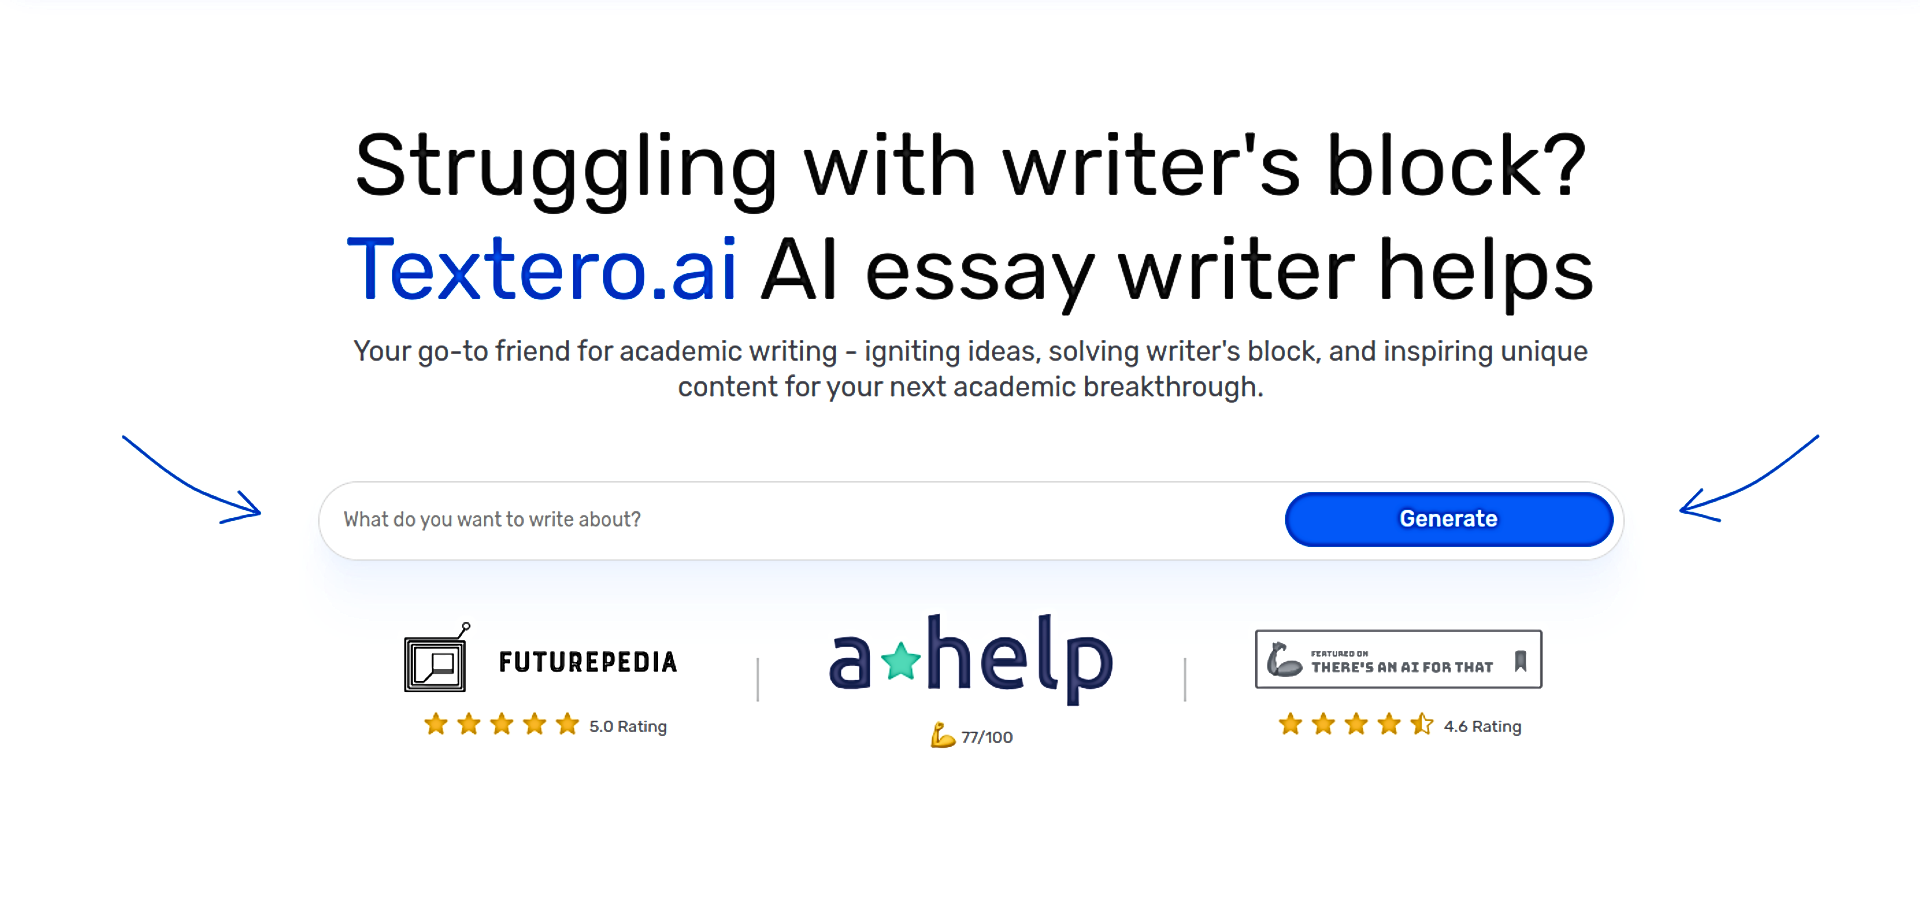 Textero AI Essay Writer featured